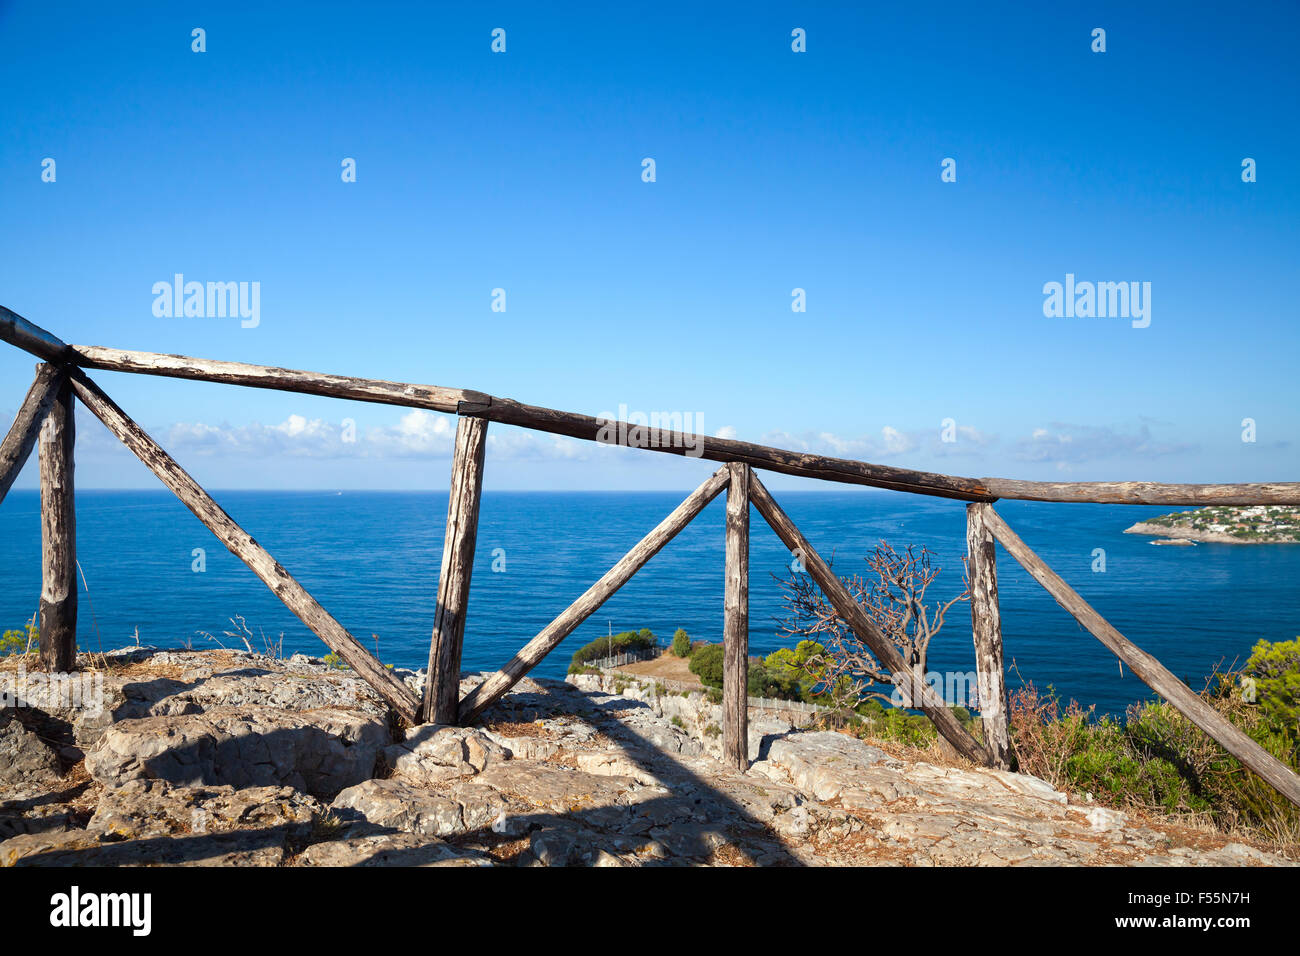 Holzgeländer auf felsigen Küste des Mittelmeeres, Gaeta, Italien Stockfoto